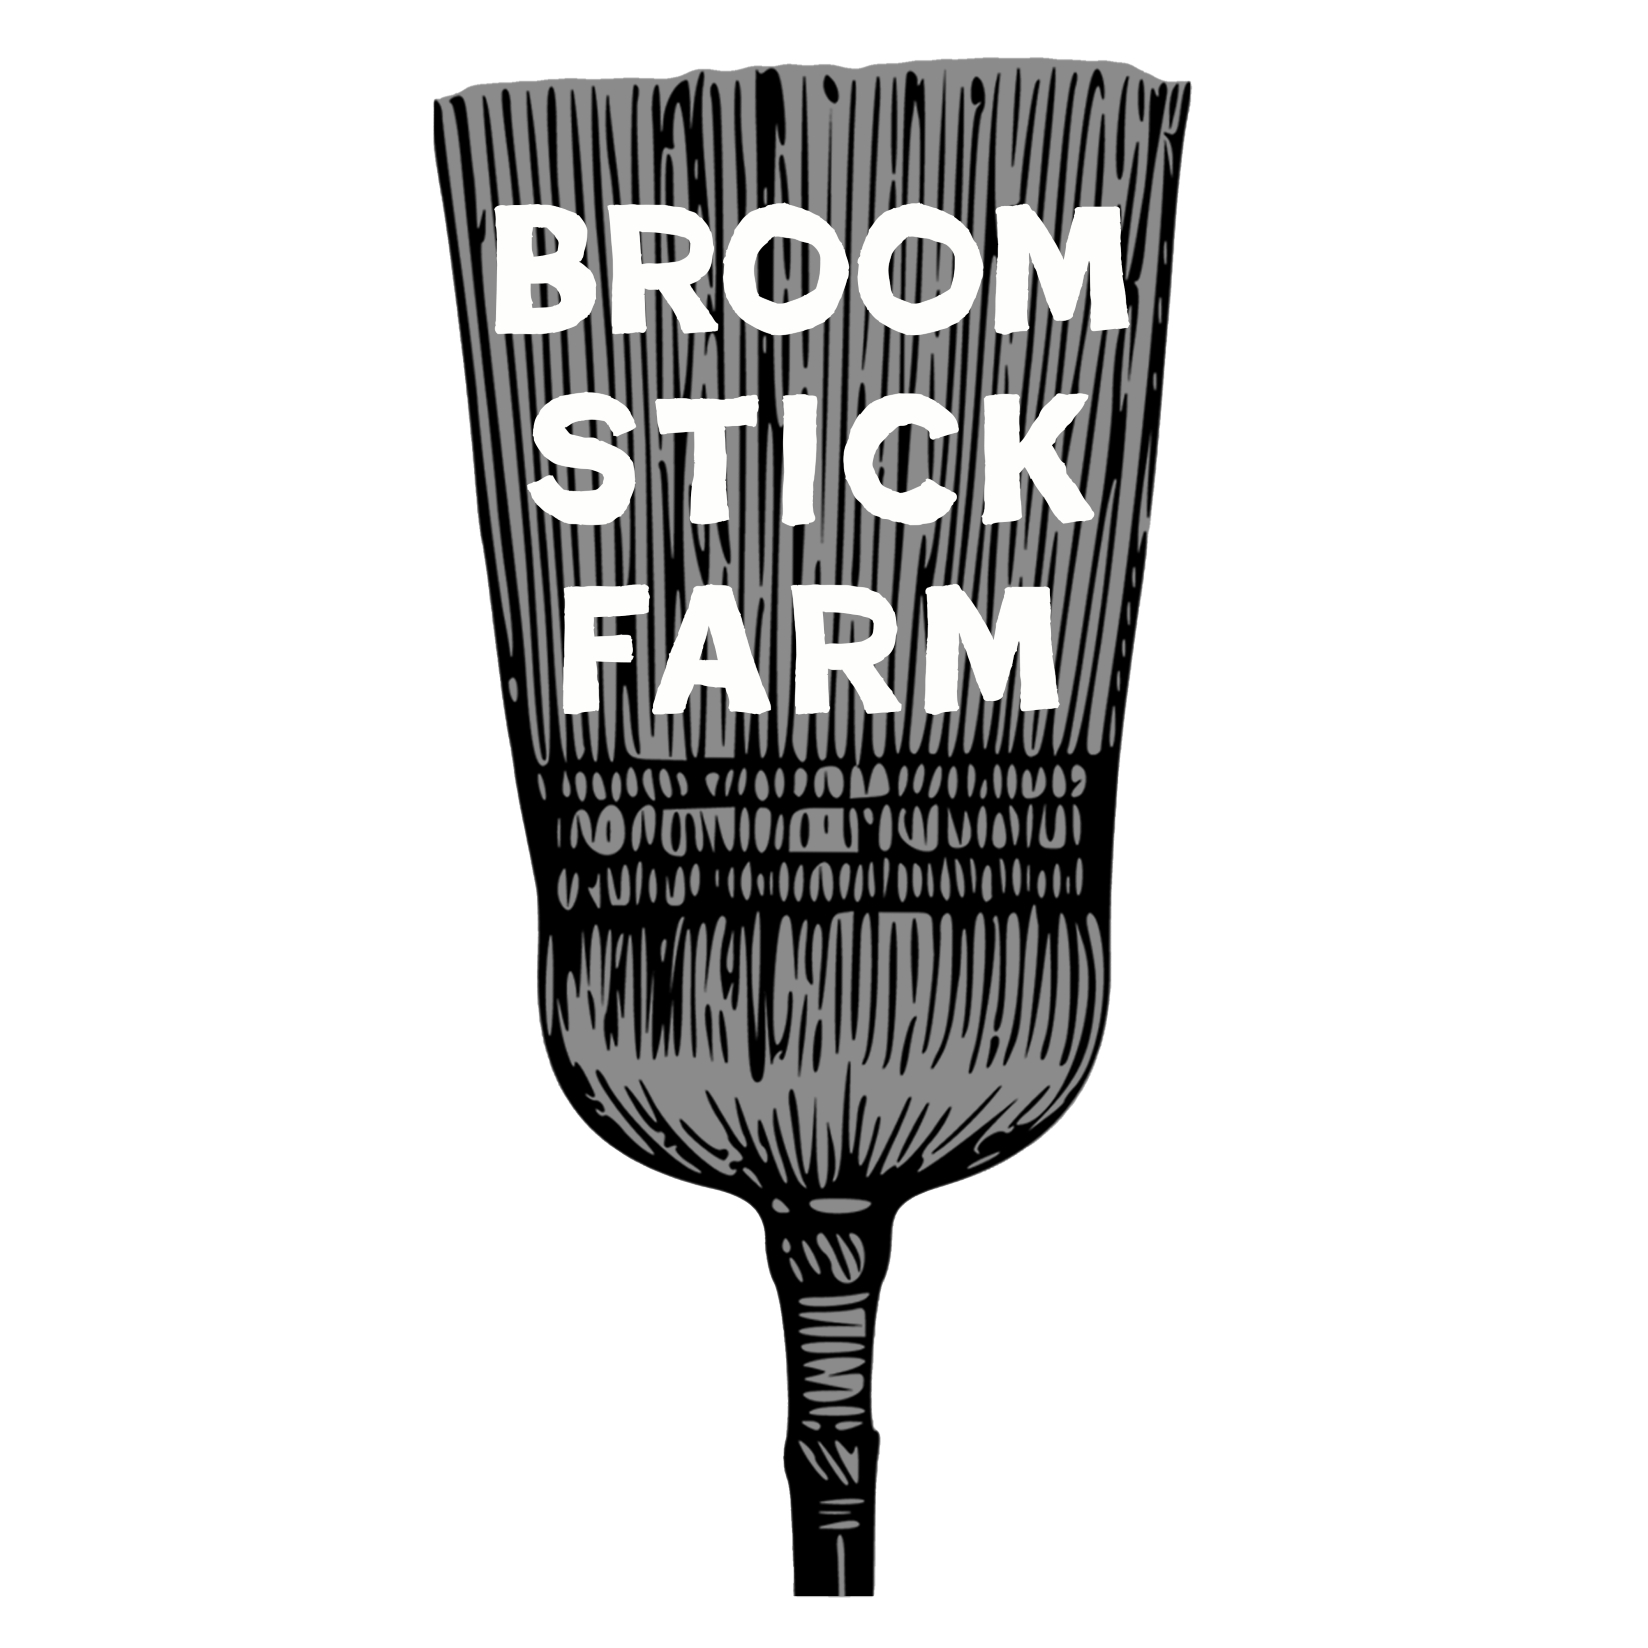 Broomstick Farm